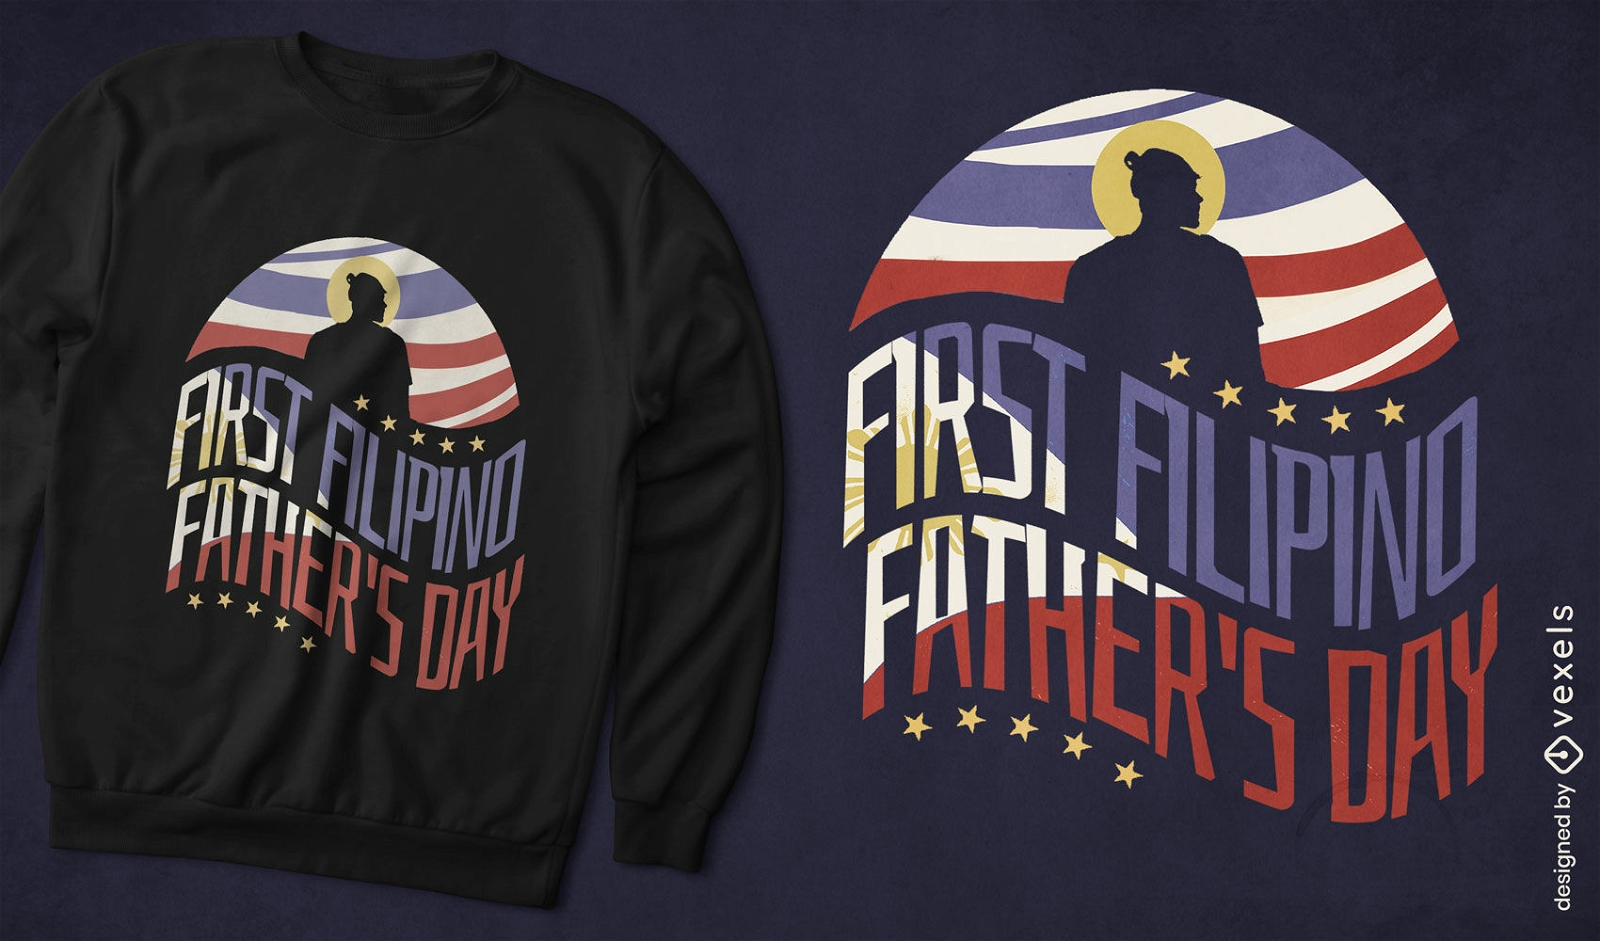 Philippinisches Vatertags-T-Shirt-Design